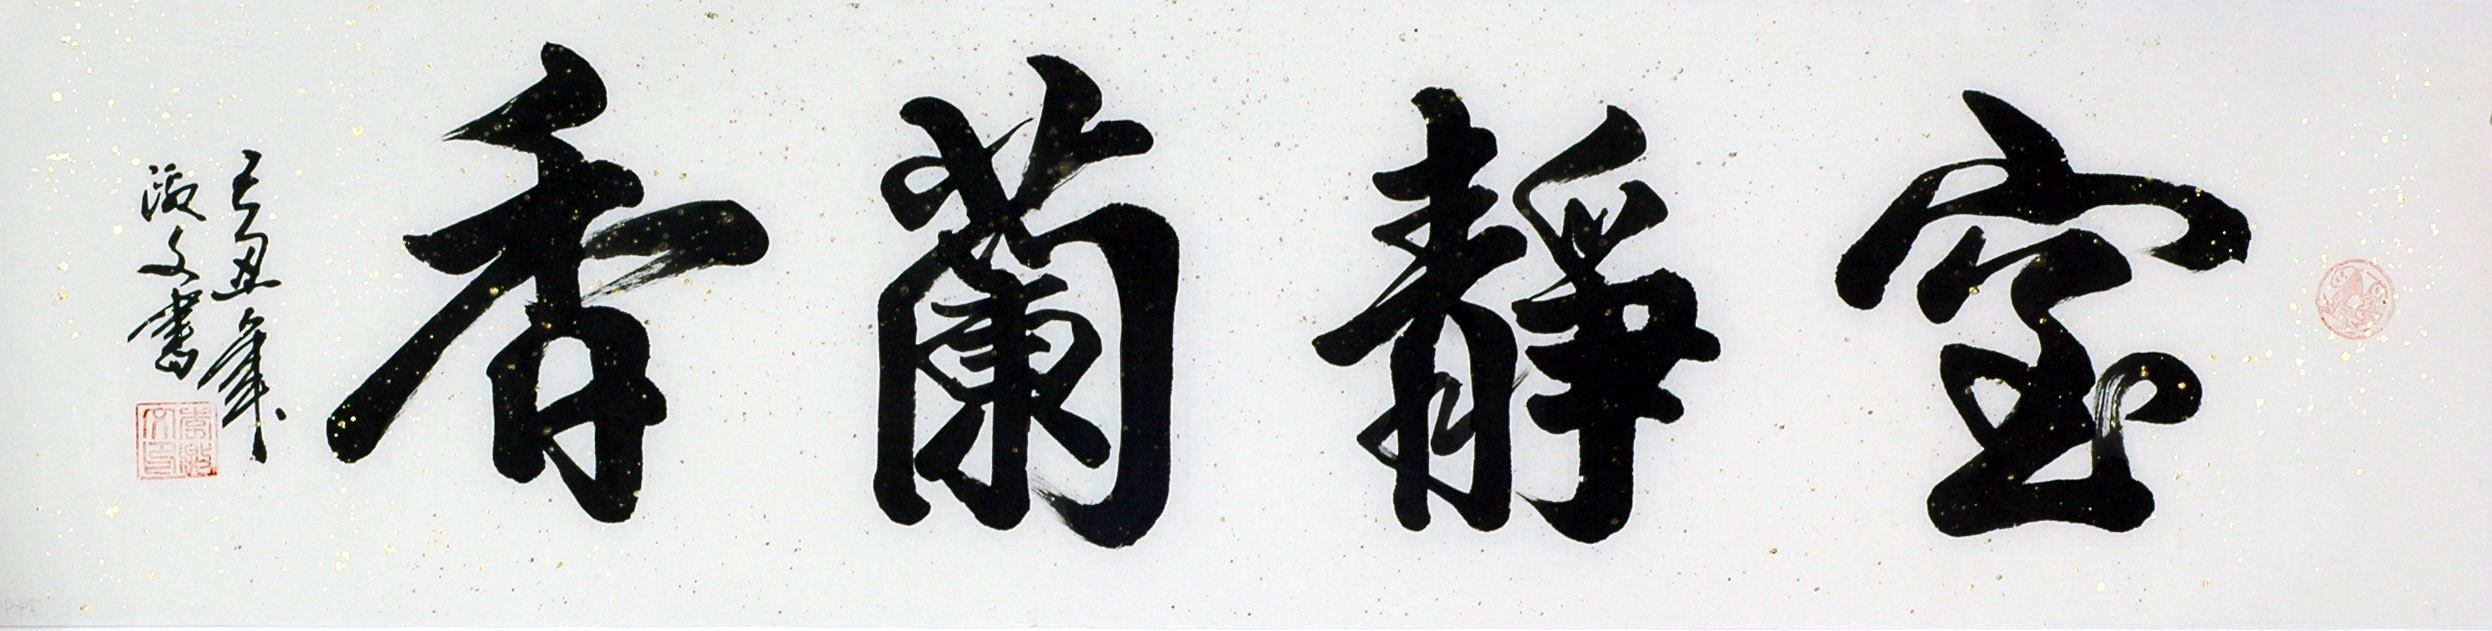 Chinese Cursive Scripts Painting - CNAG010983